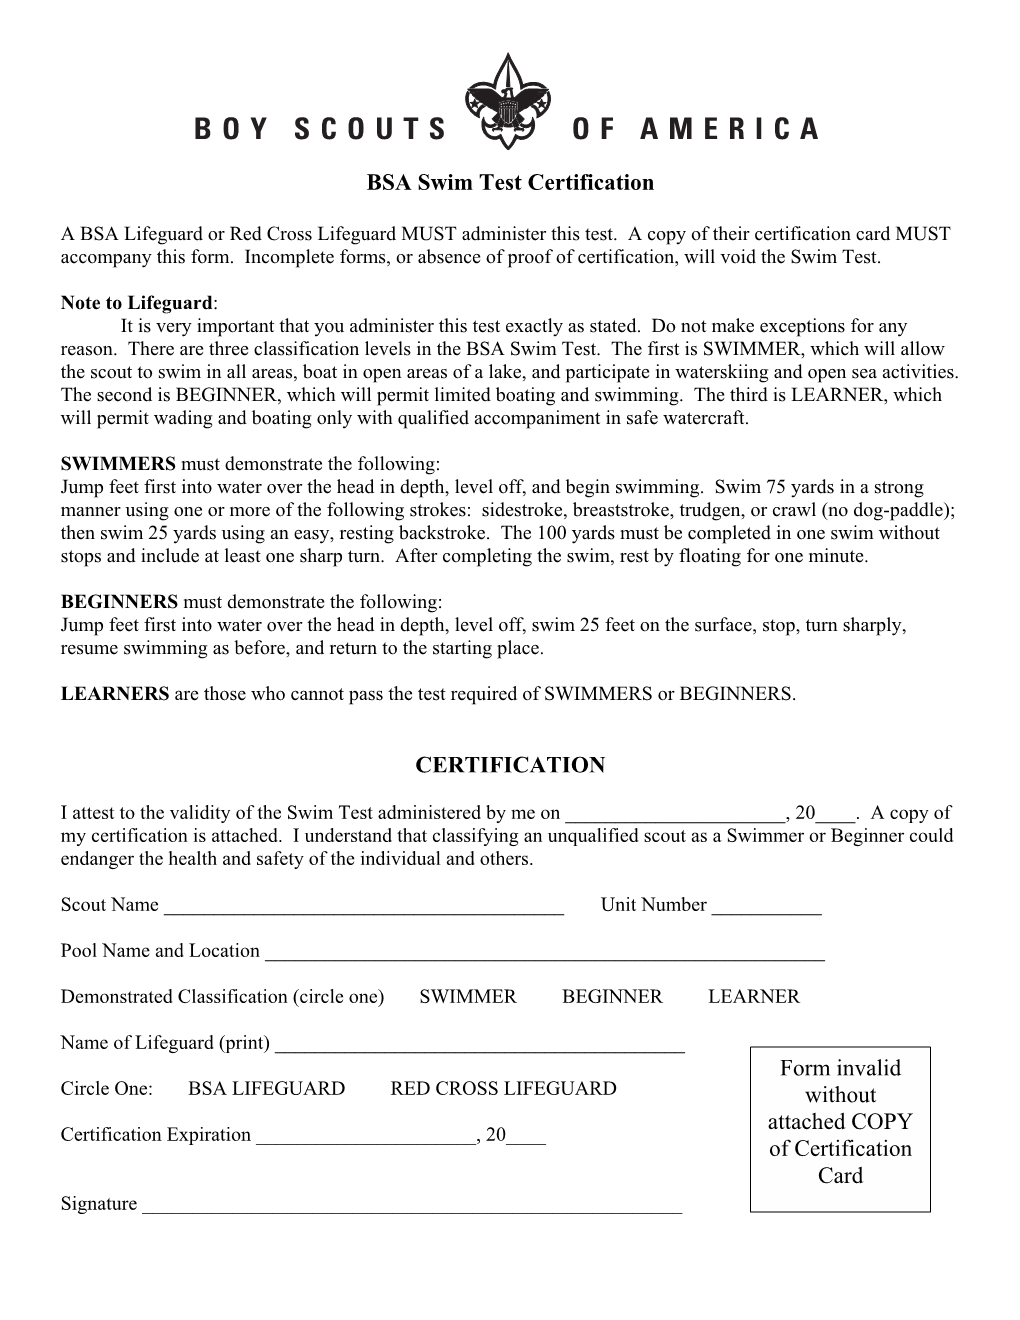 BSA Swim Test Certificate